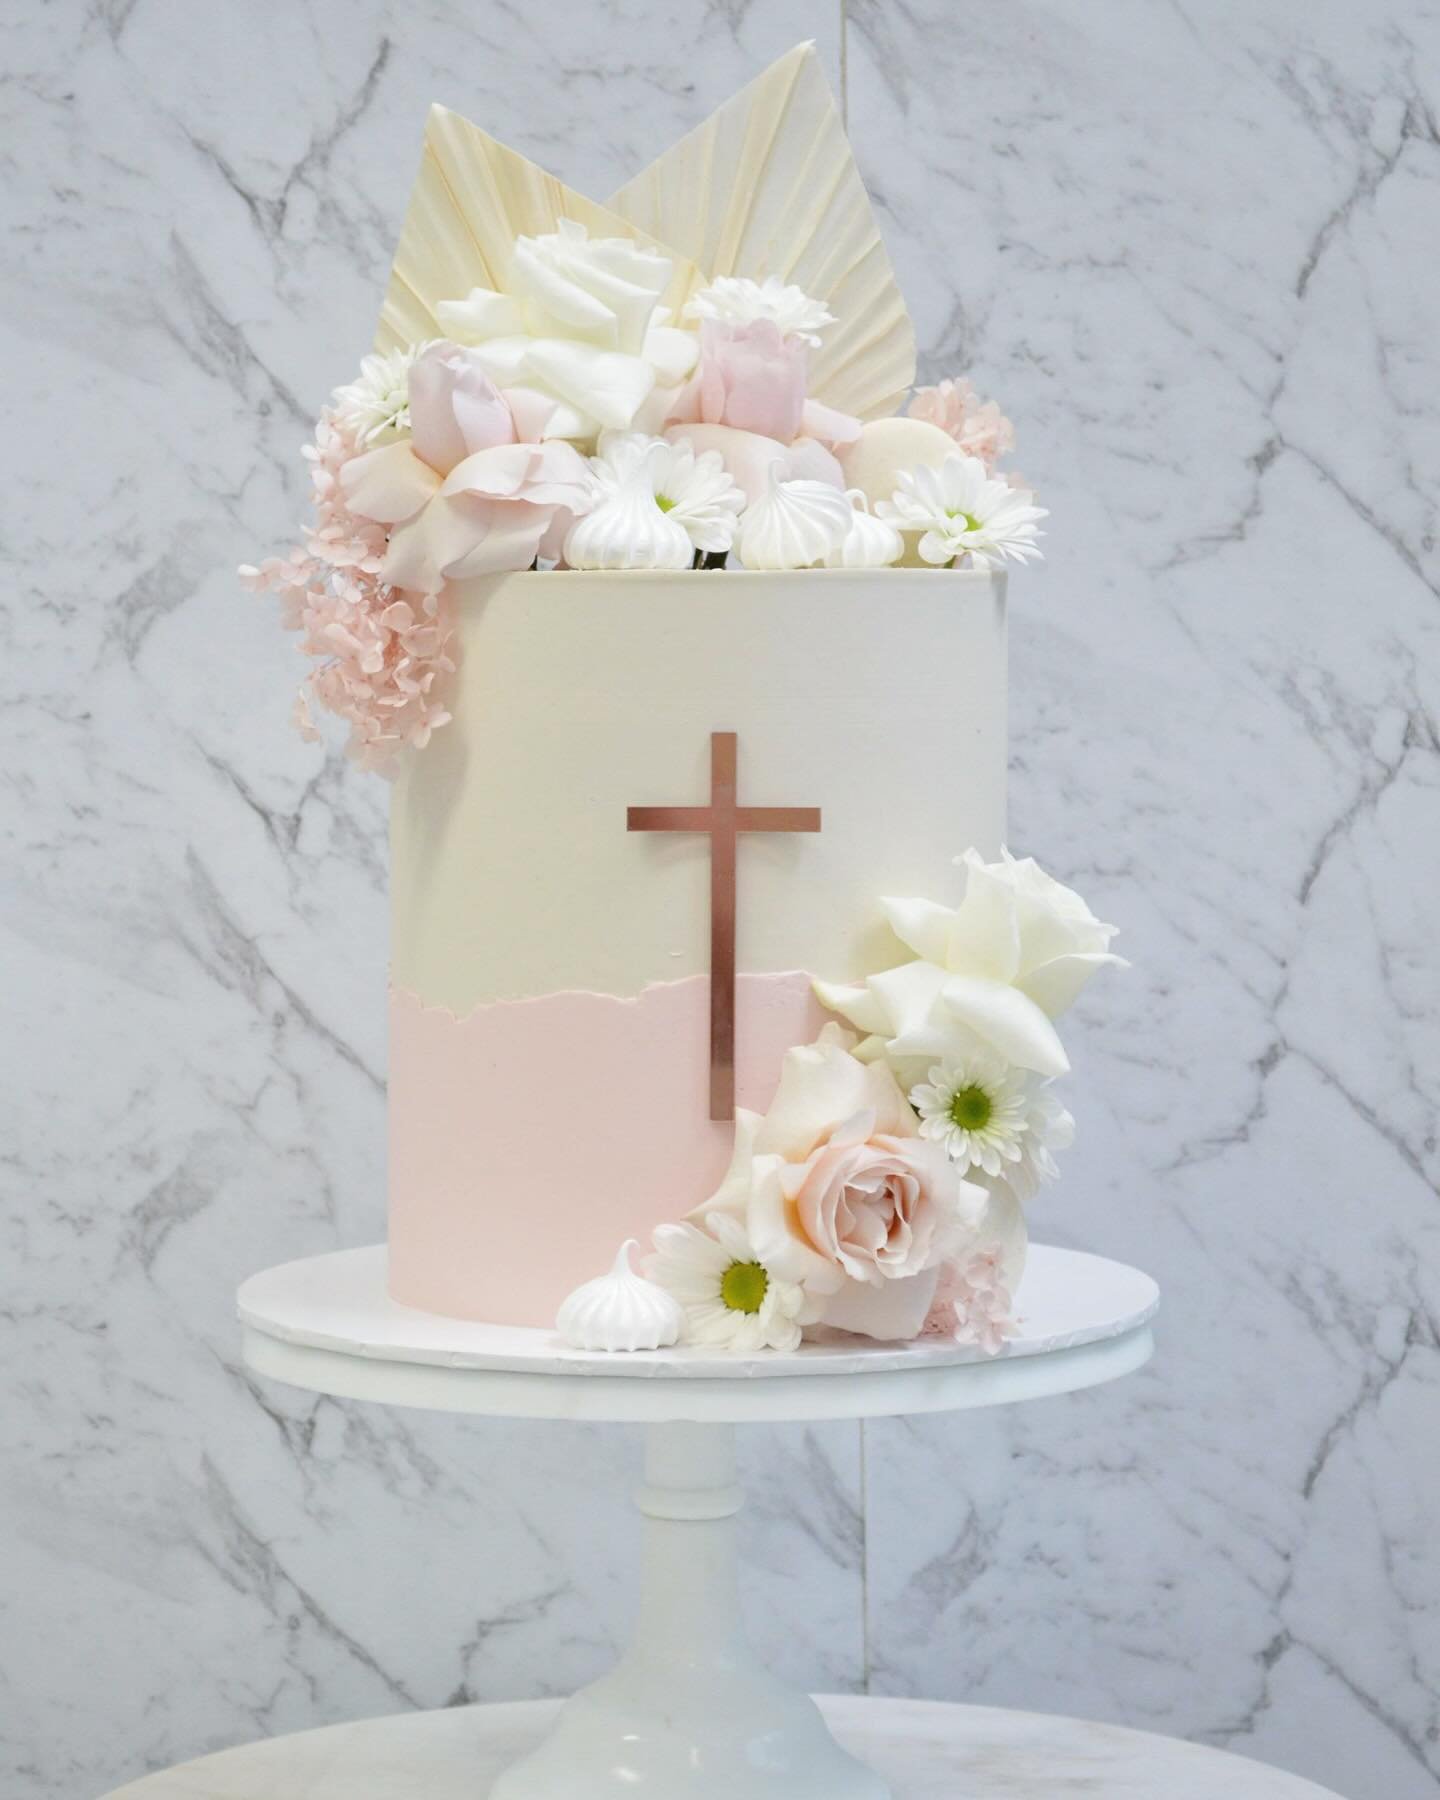 🩷 D R E A M Y  P I N K S 🩷
In love with this cake I created for a baptism a few weeks ago 😍

Florals: @werribeestationflorist 
Cross: @ukitlaserdesign 
.
.
.
.
#cake #cakes #cakestagram #cakesofinsta #cakesofig #cakesofinstagram #igcakes #cakesdai